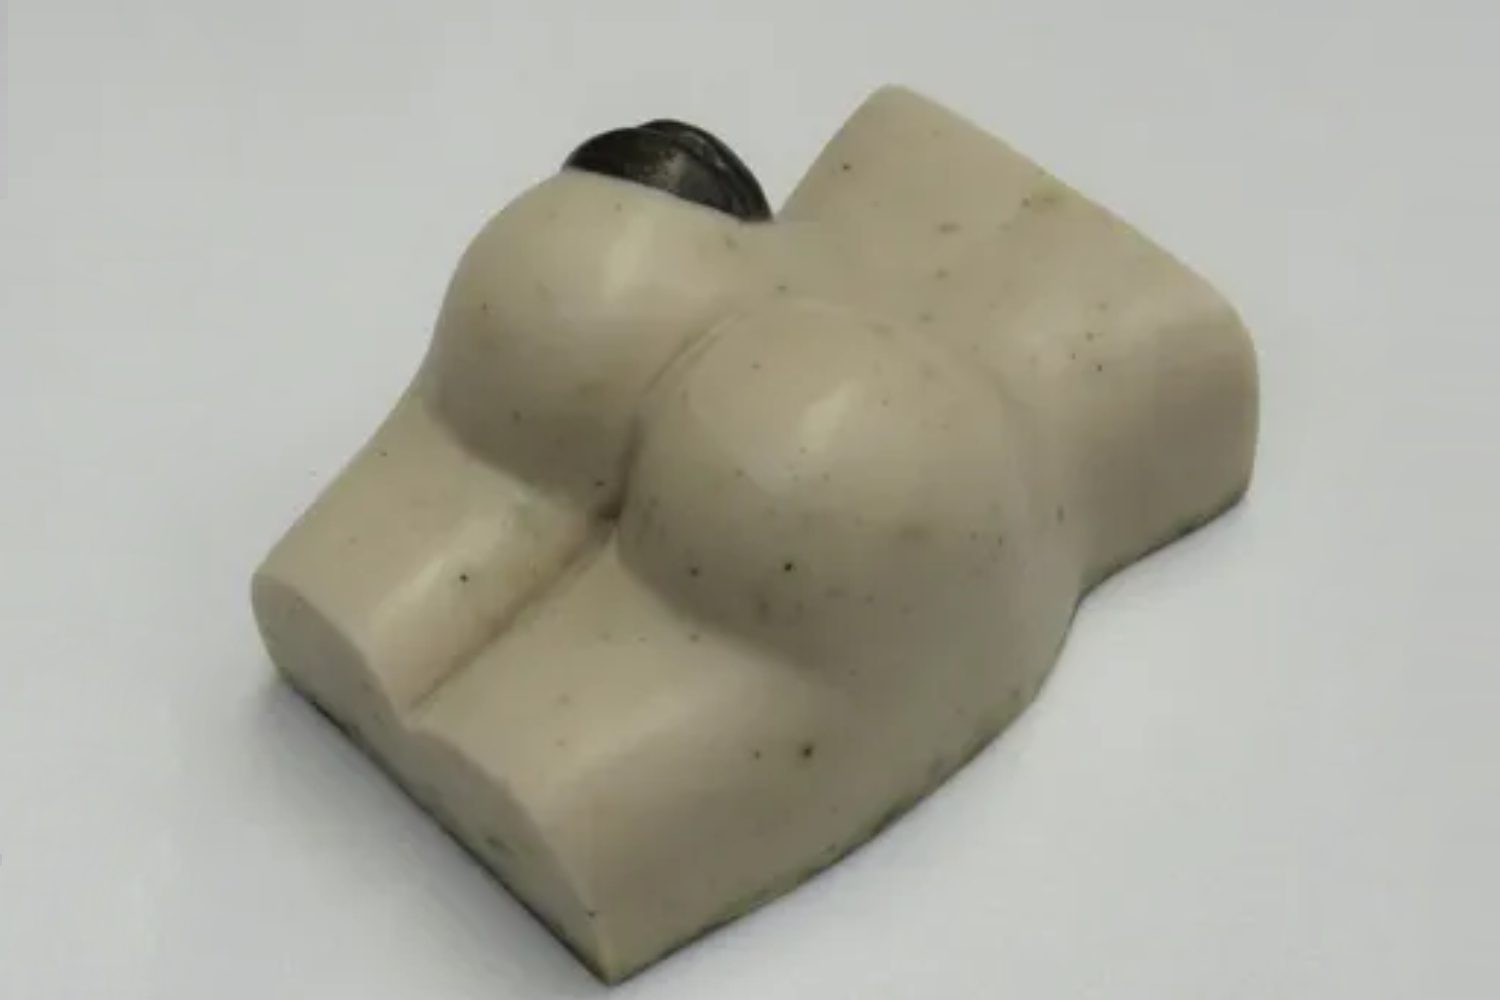 A white piece of soap shaped like a woman 's buttocks.